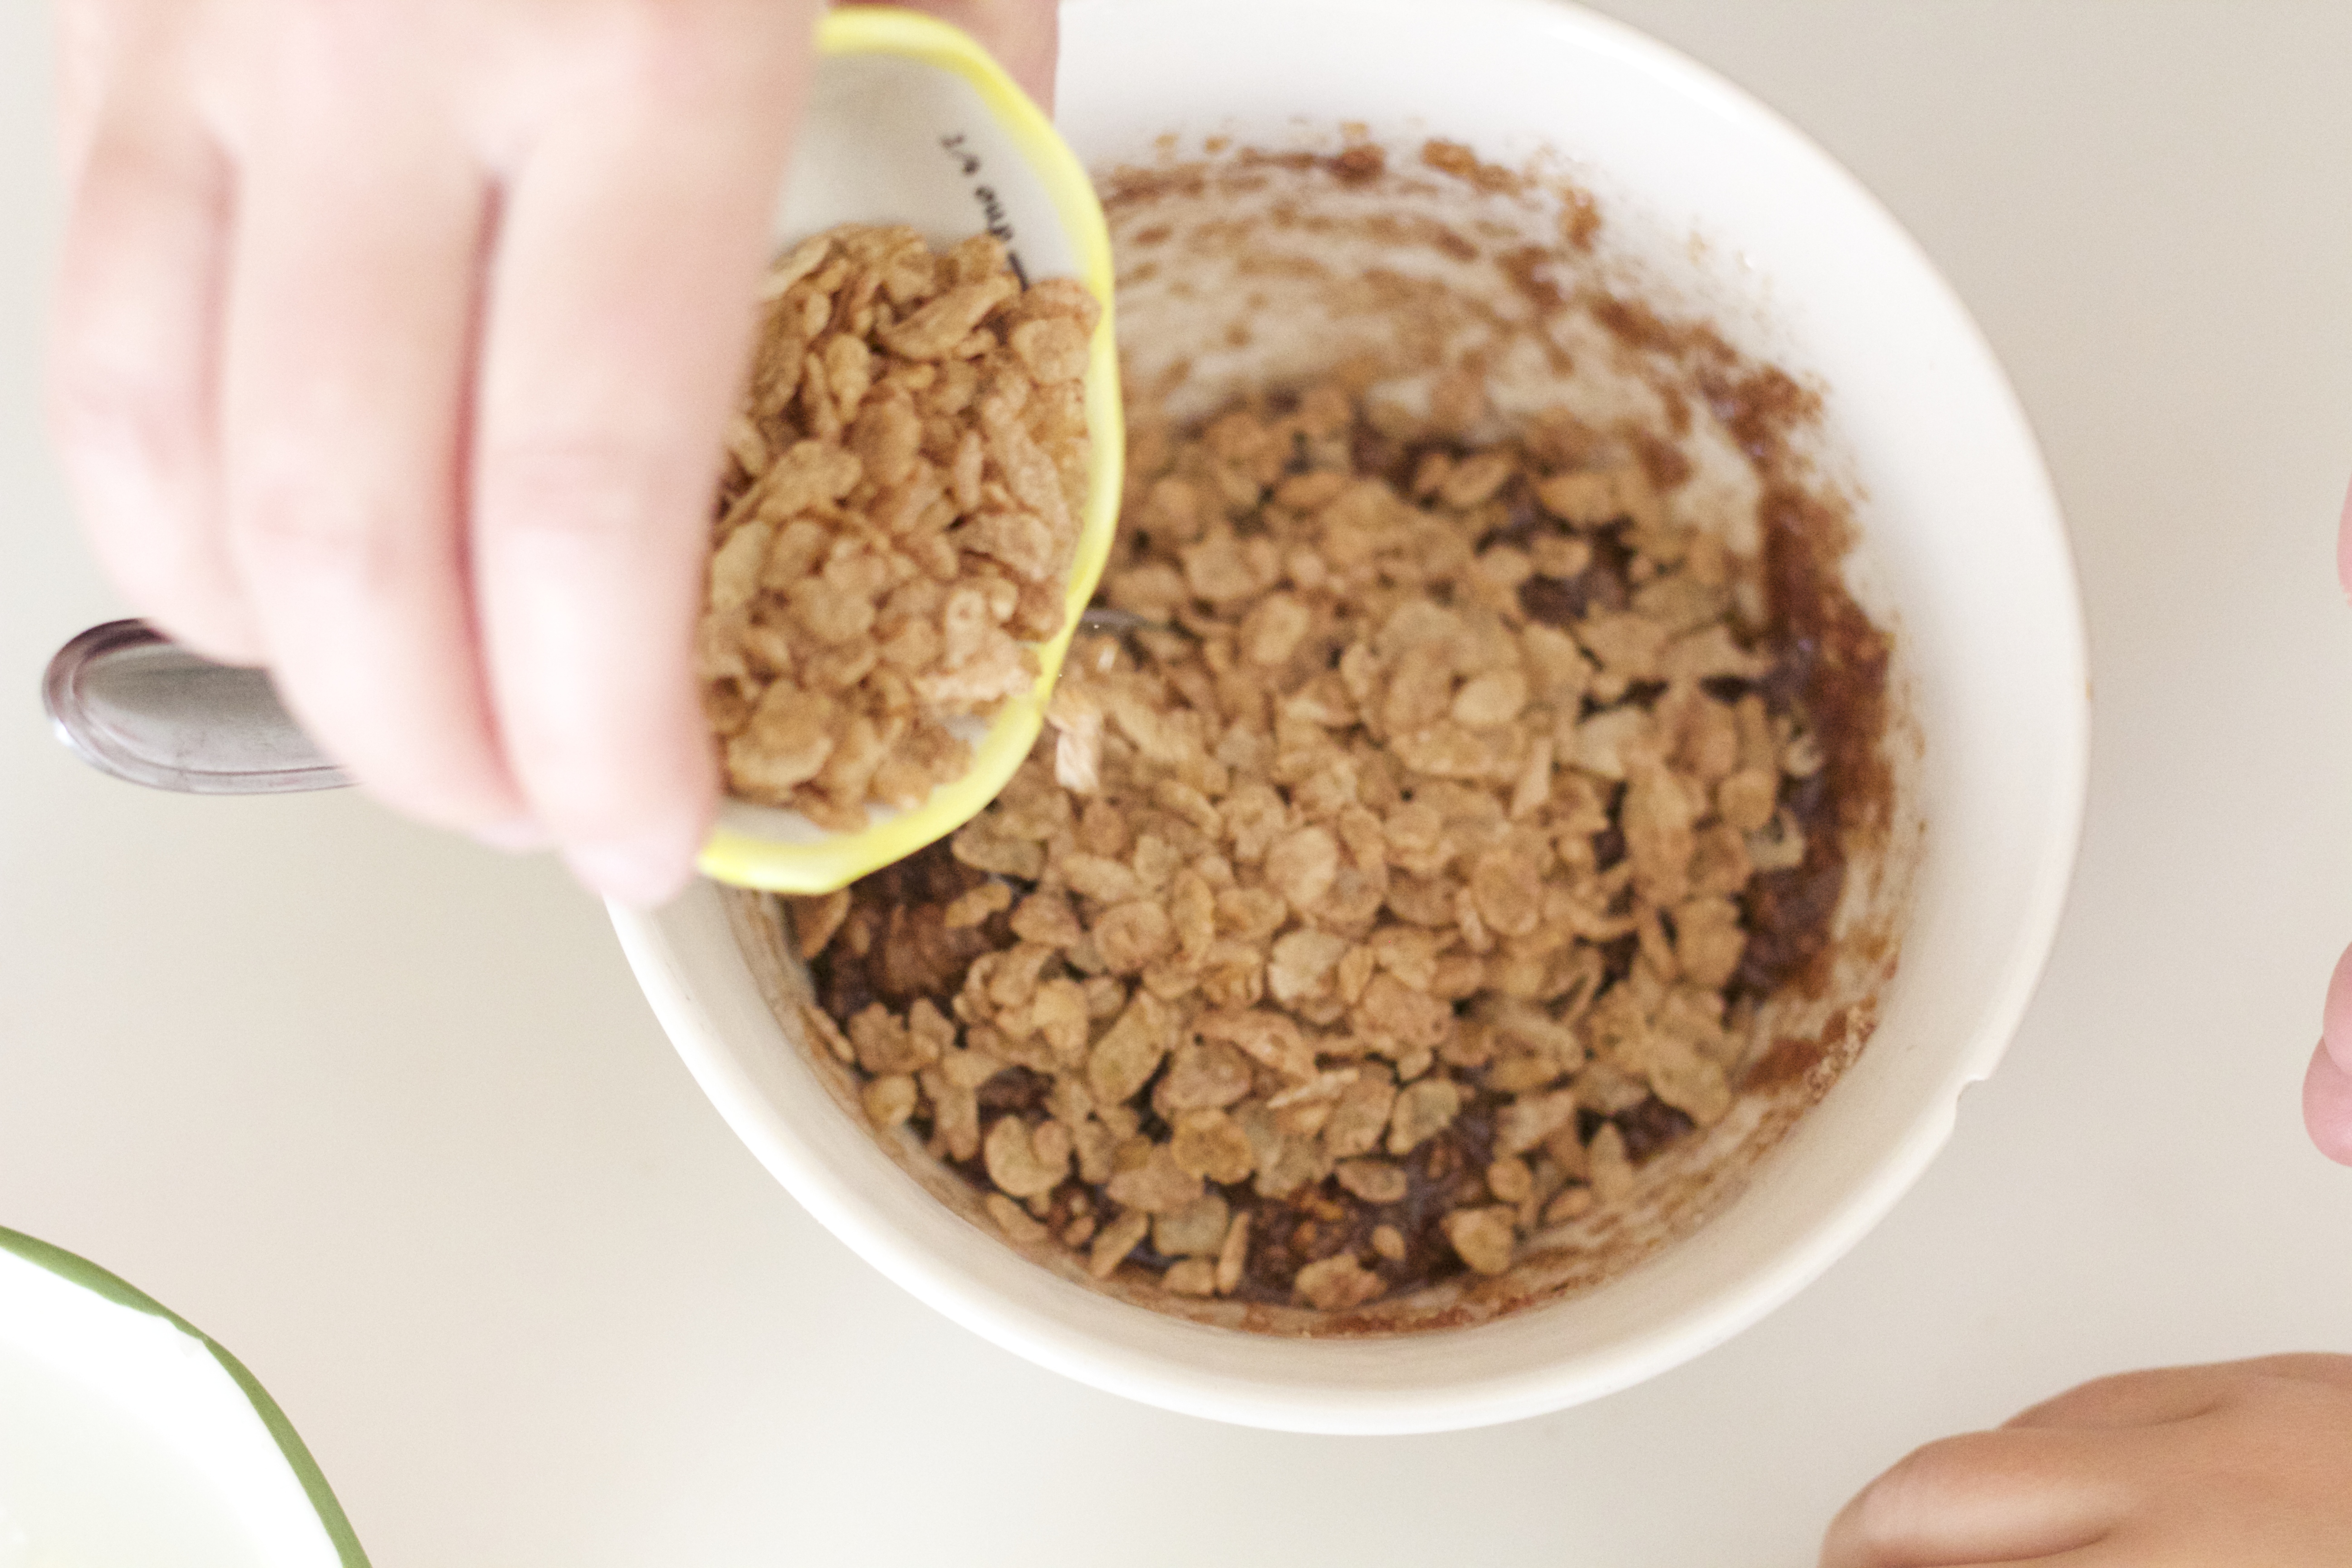 Cinnamon Sugar and Cereal Crumble